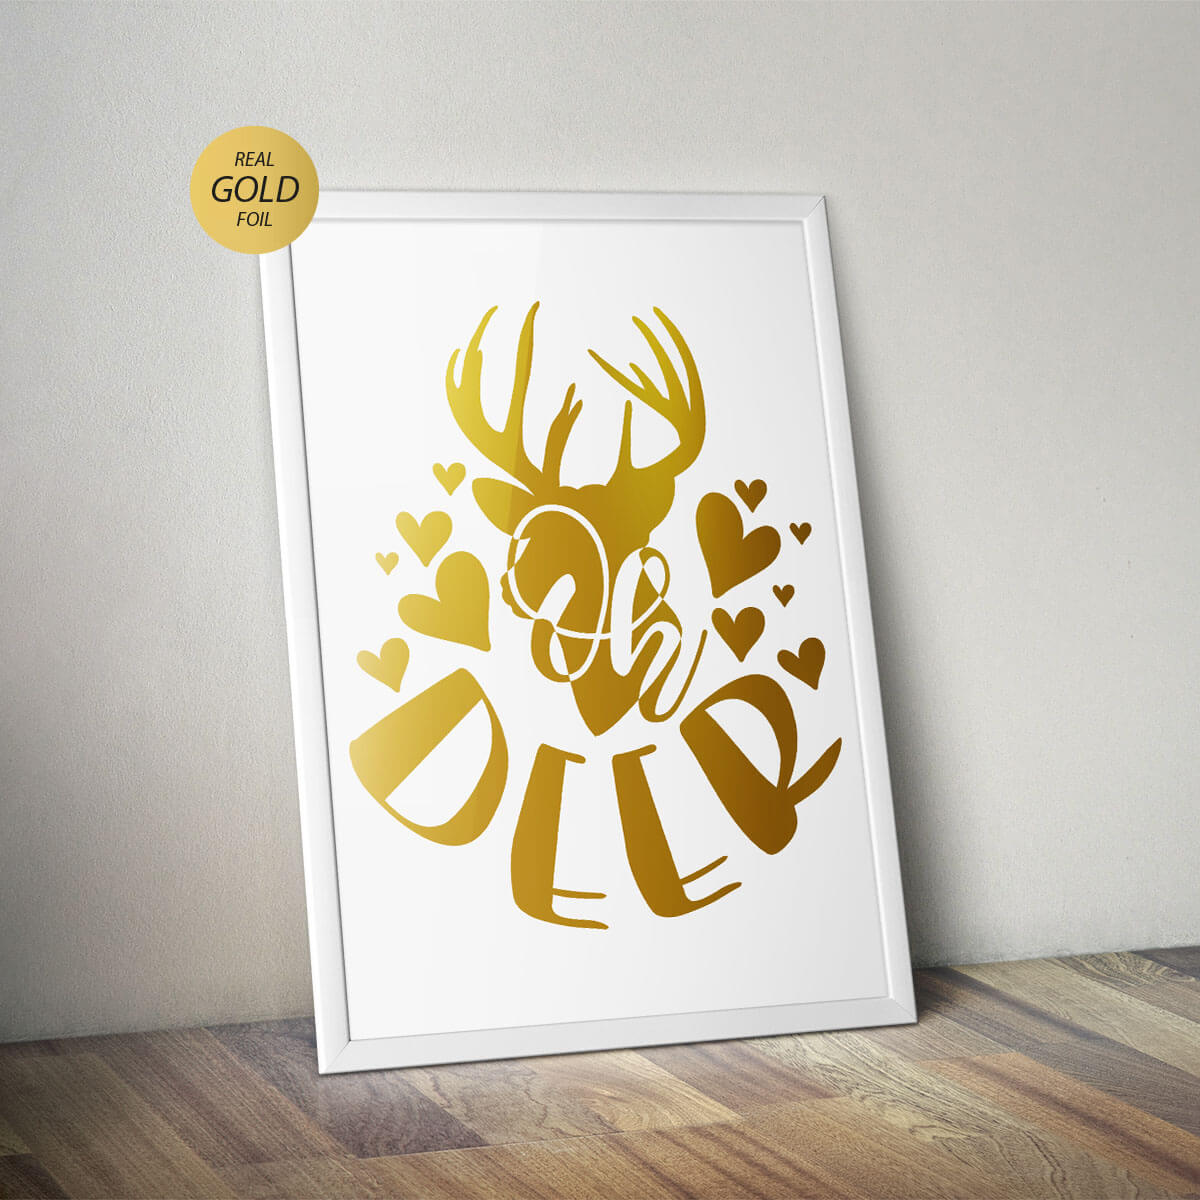 Christmas Wall Art, ‘Oh Deer’ Gold Foiled